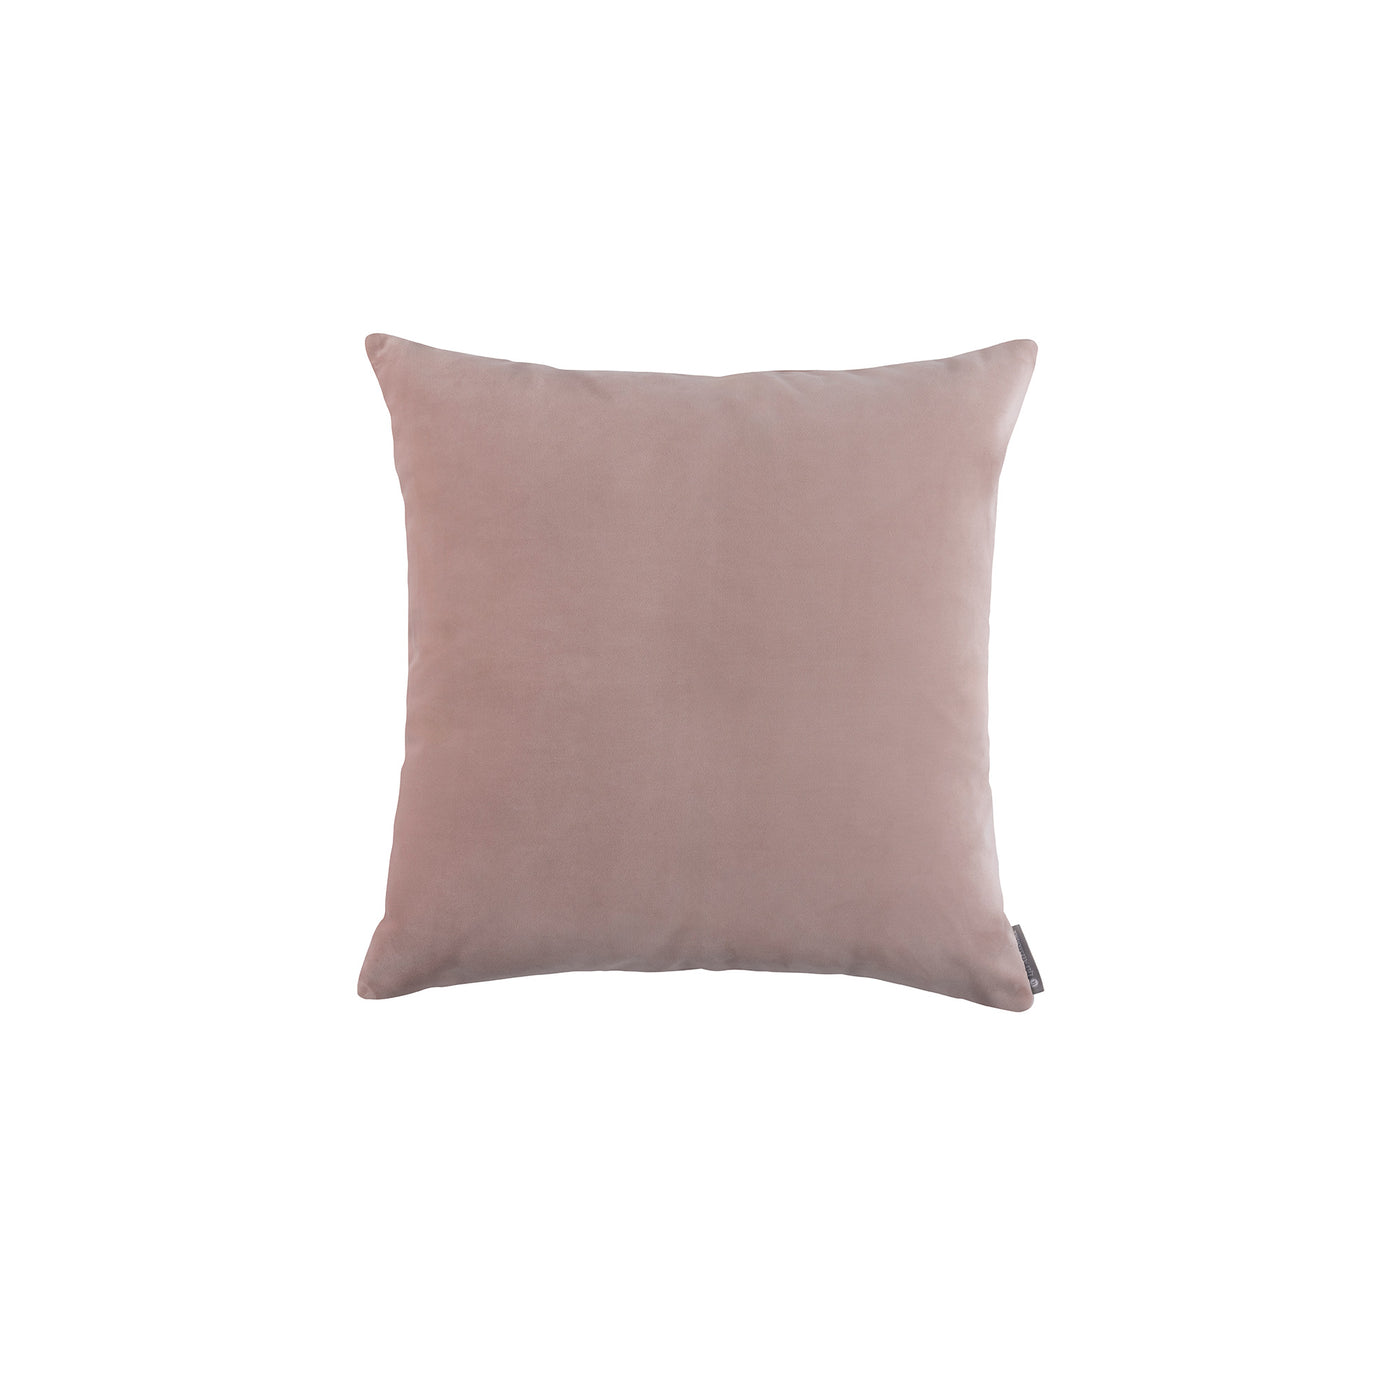 Vivid Cameo Small Square Pillow (22x22)